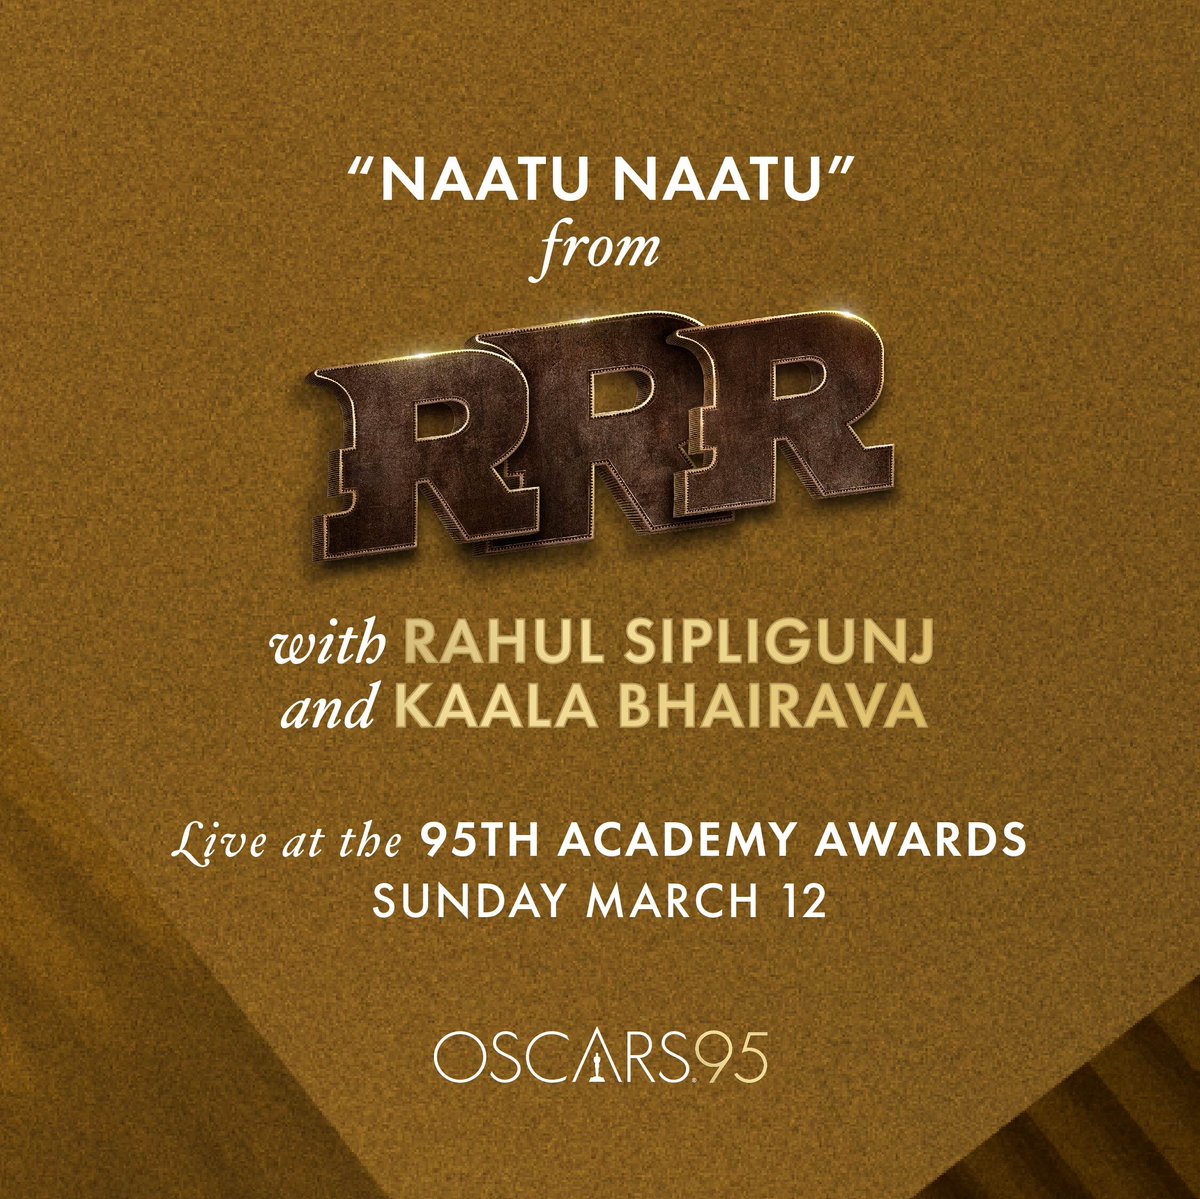 Singer Rahul Sipliganj on stage at Oscars